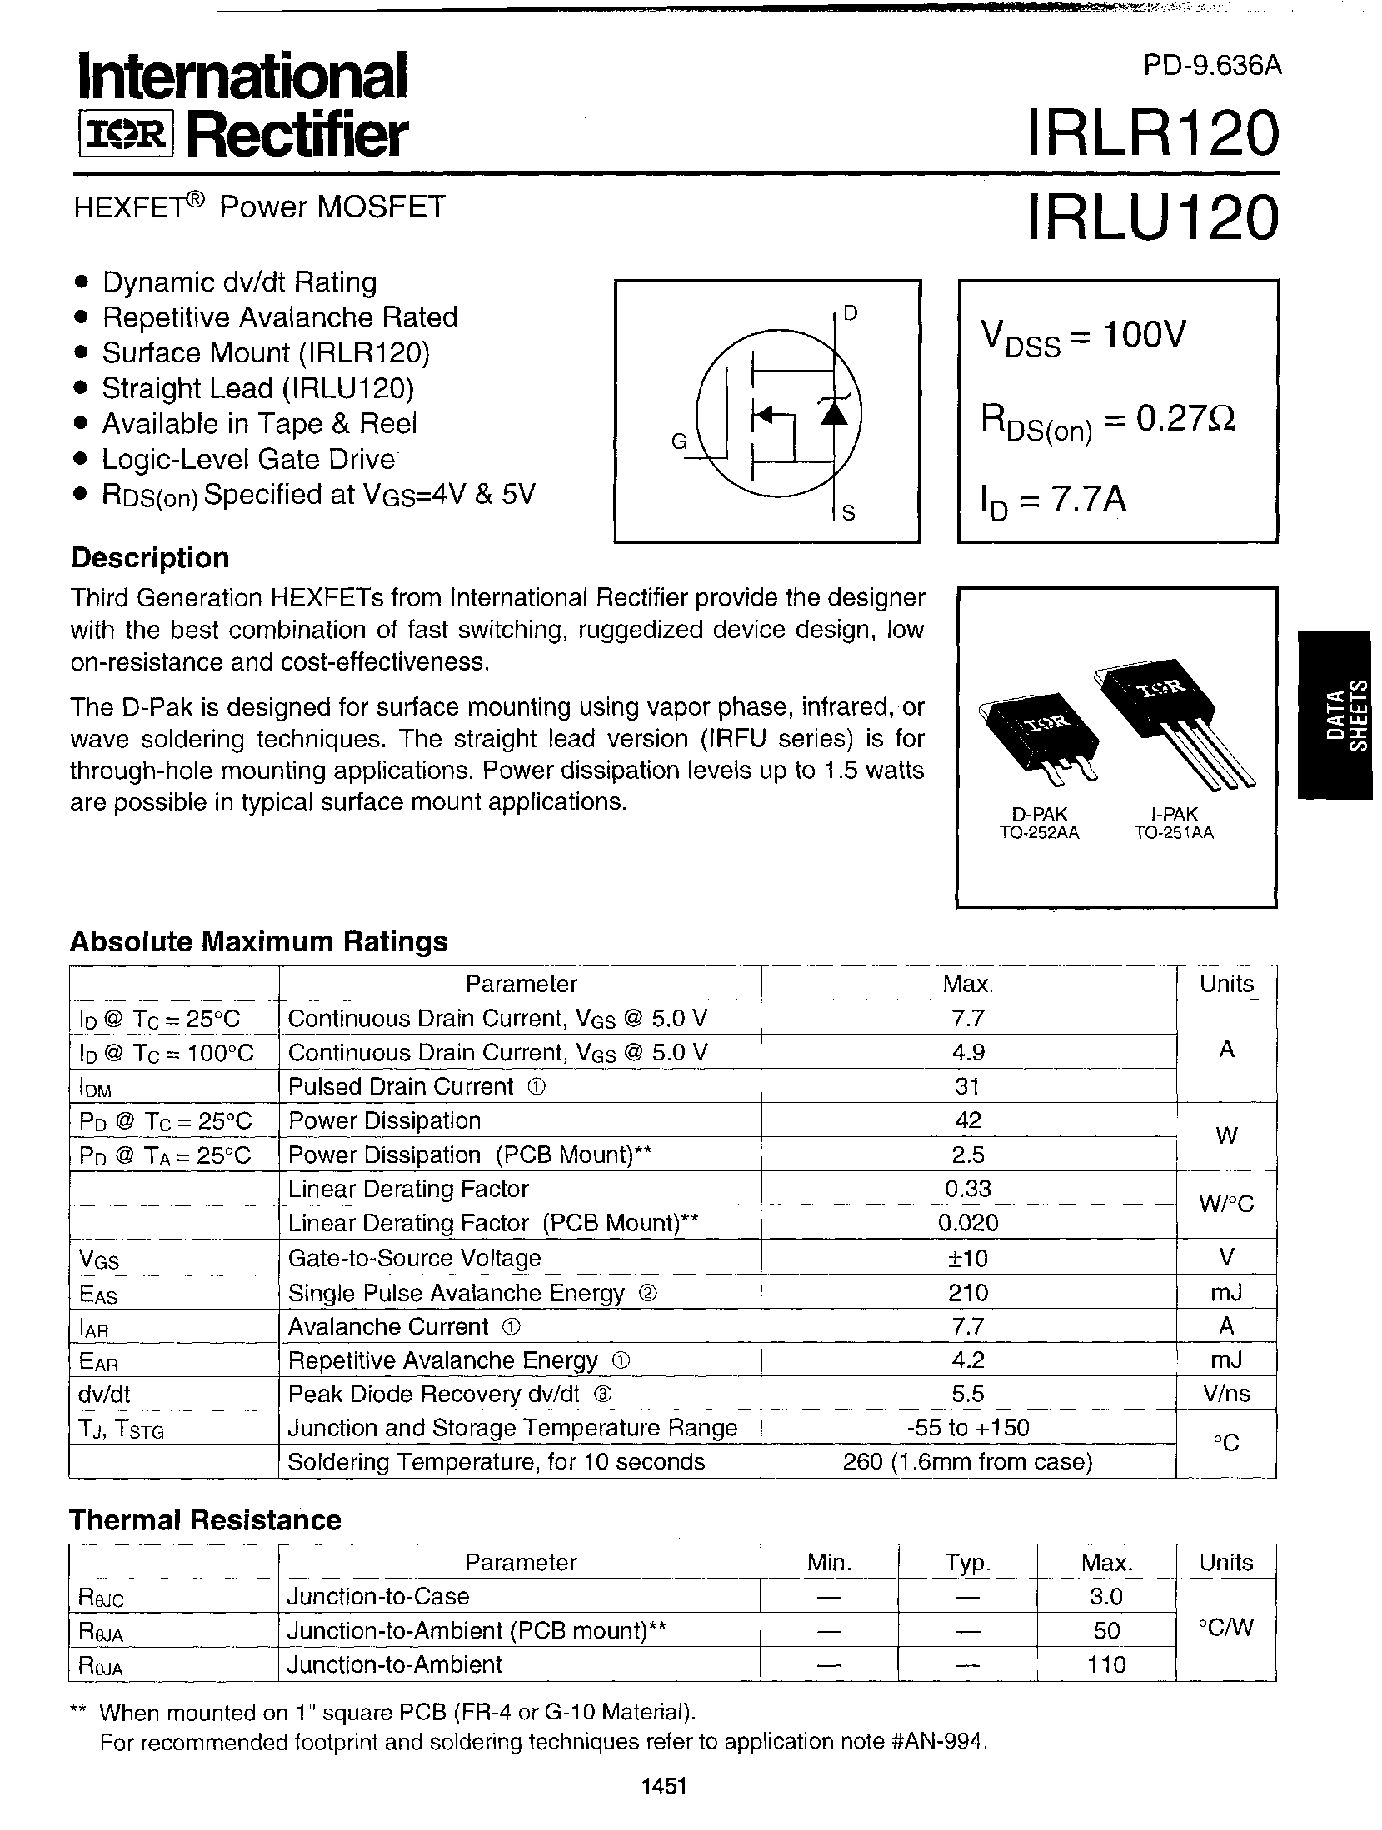 Даташит IRLR120 - (IRLR120 / IRLU120) HEXFET Power MOSFET страница 1